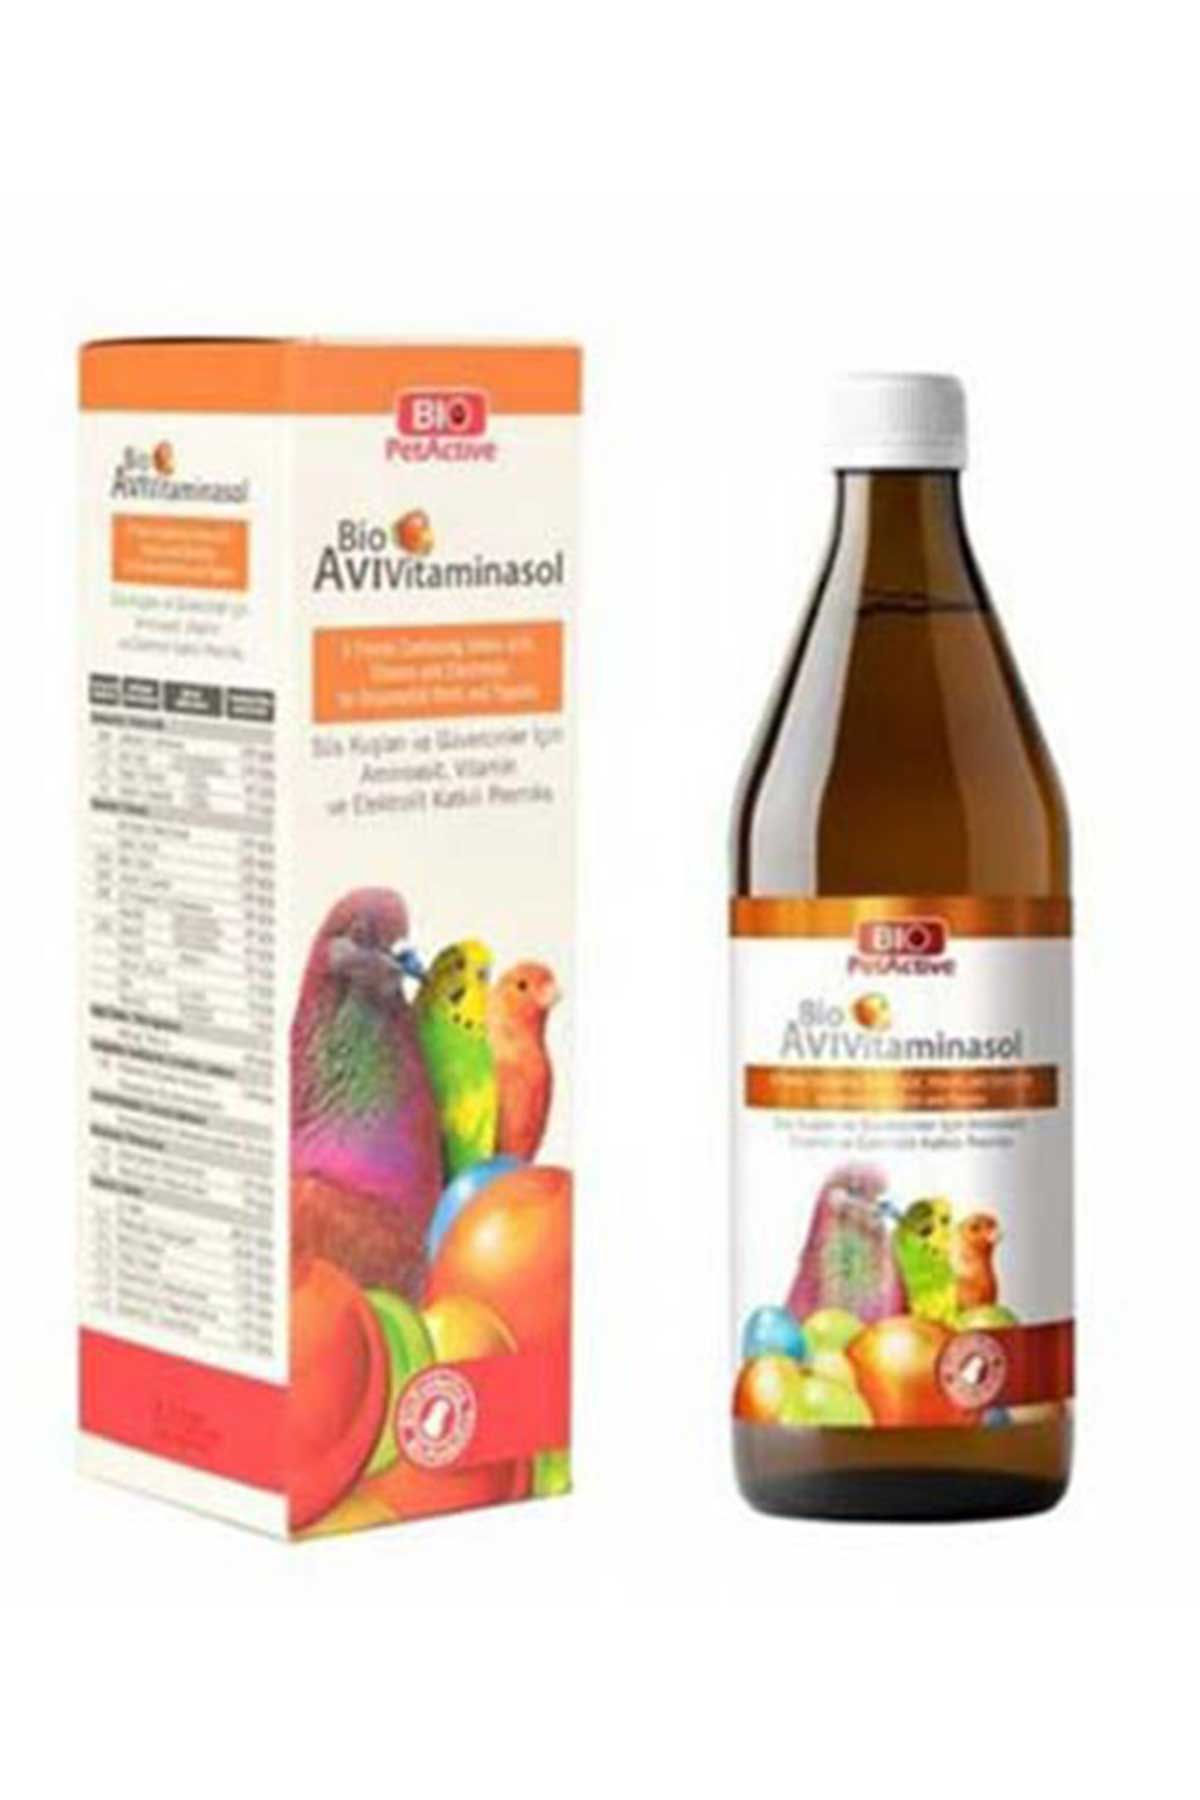 Bio PetActive Avivitaminasol Kuş Vitamini ve Aminoasit 500ml